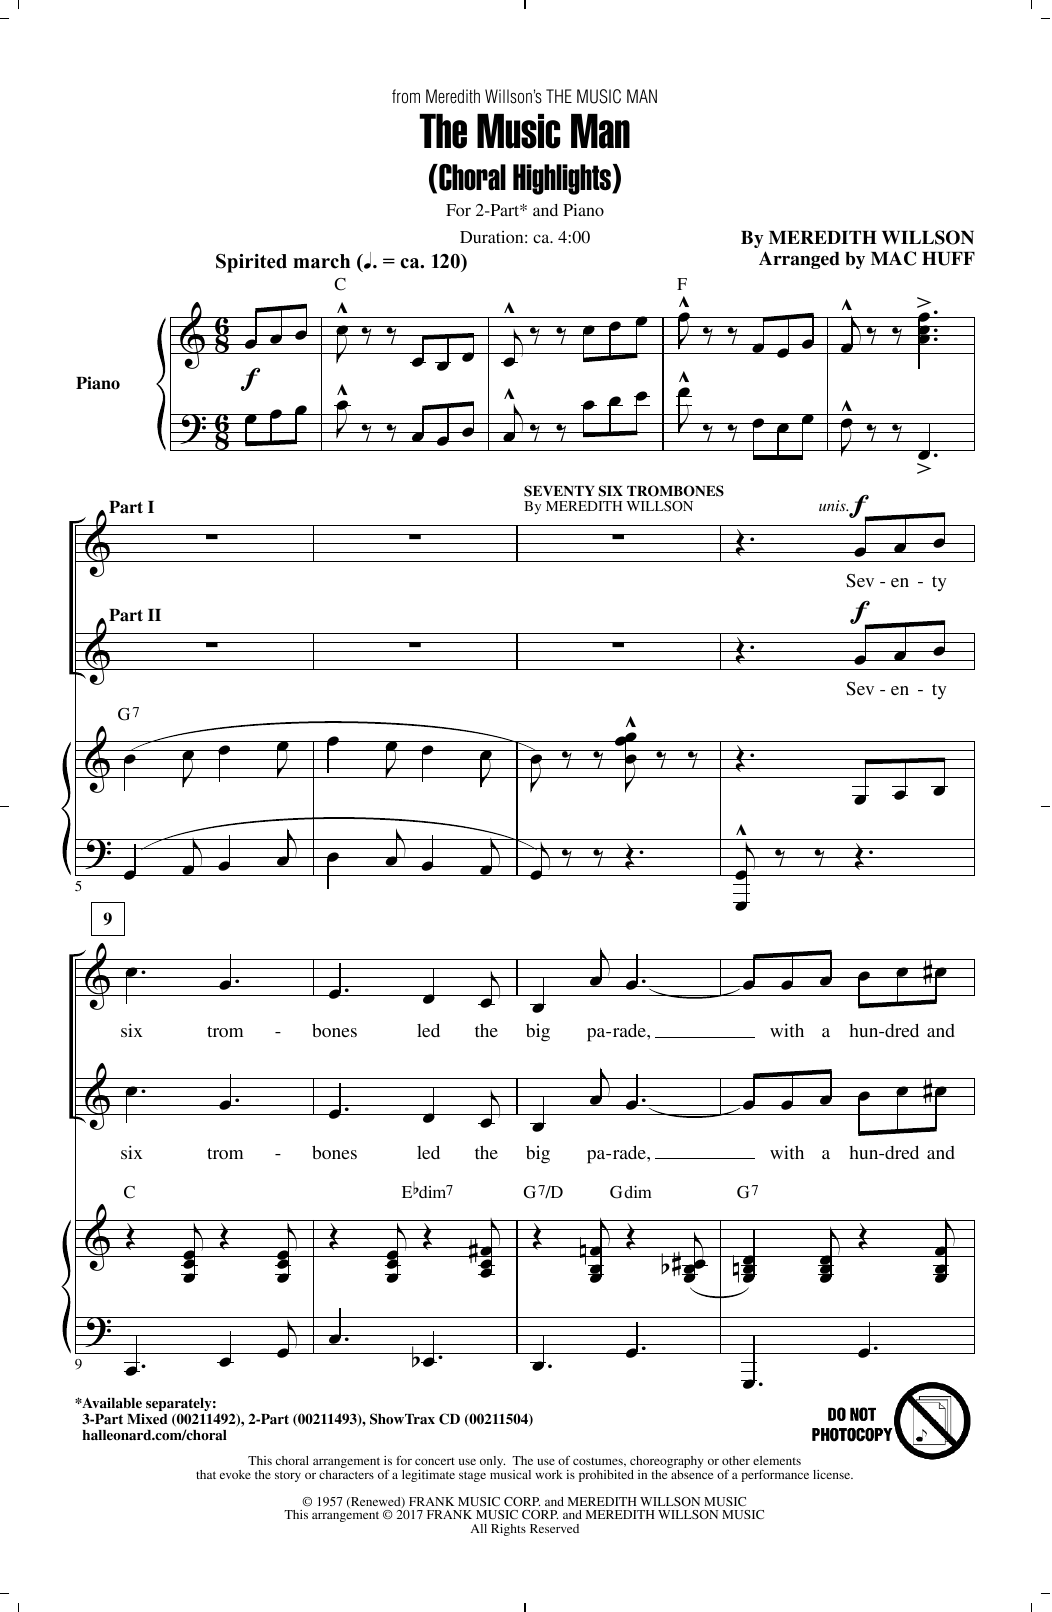 Download Mac Huff The Music Man (Choral Highlights) Sheet Music